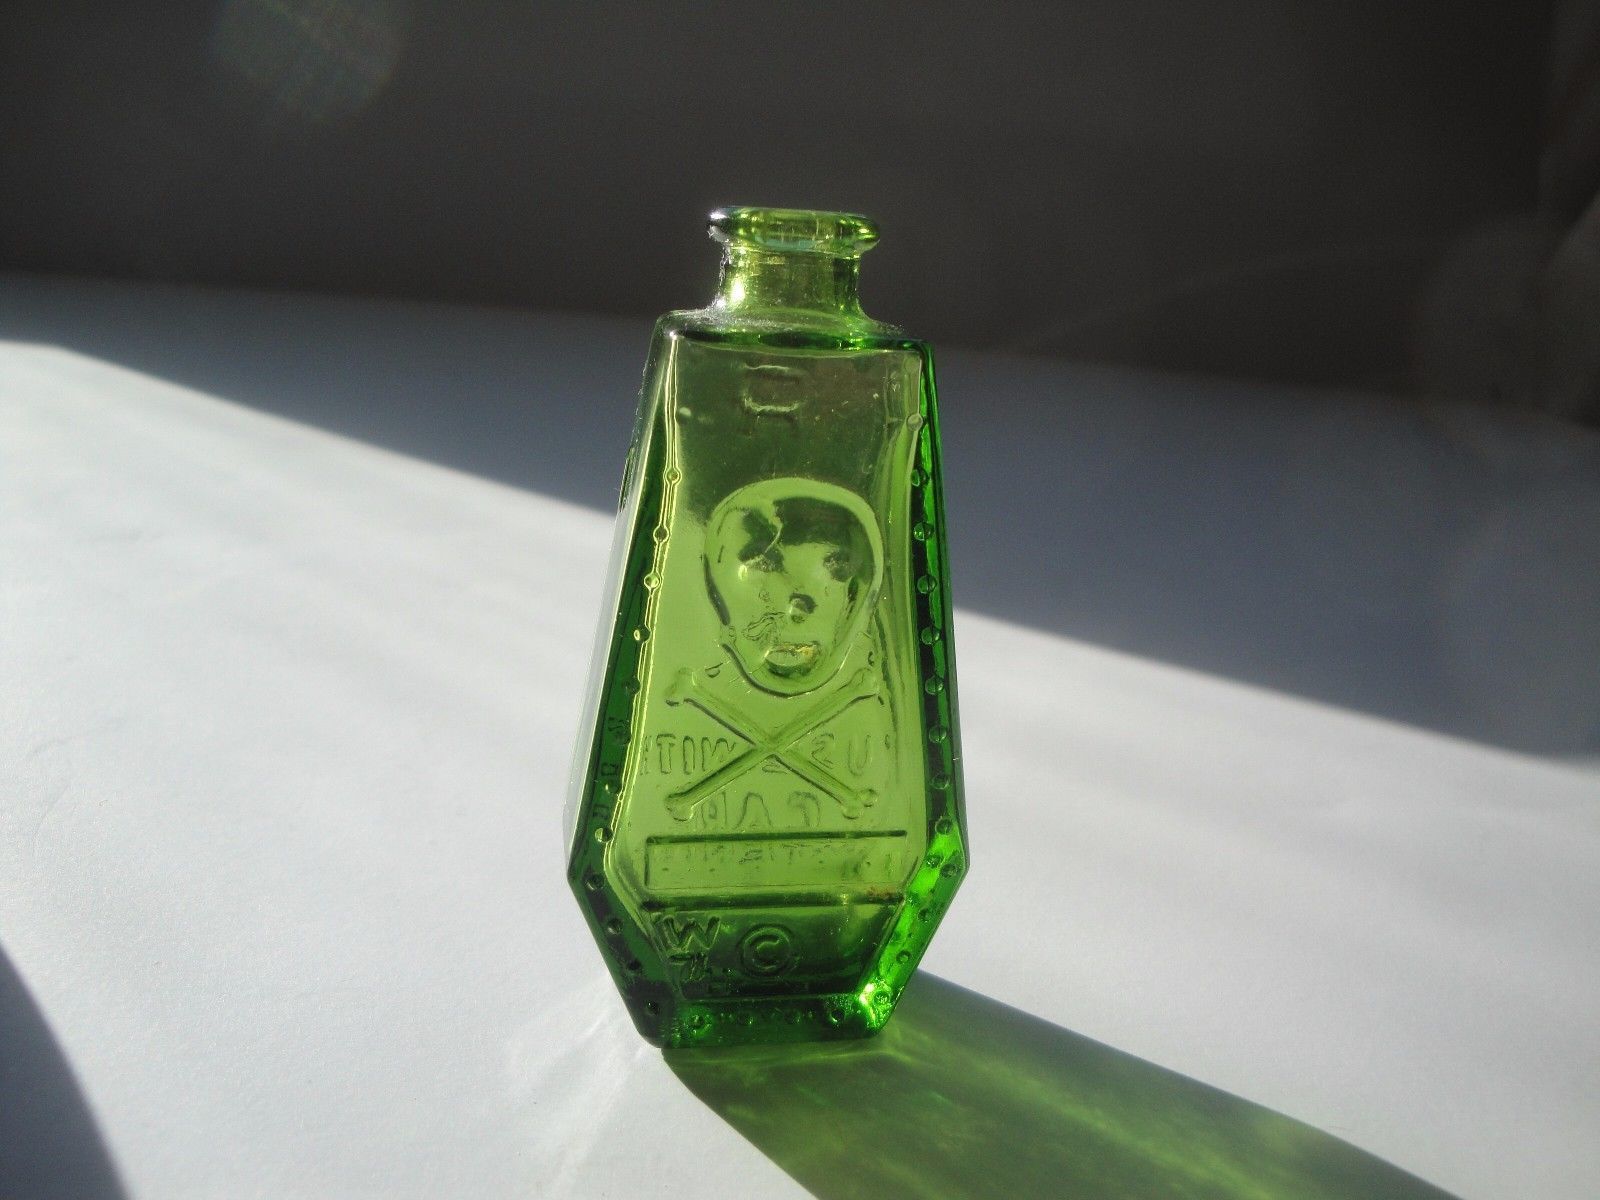 Poison Bottle Wallpaper Widescreen. Bottle, Perfume bottles, Antique collection